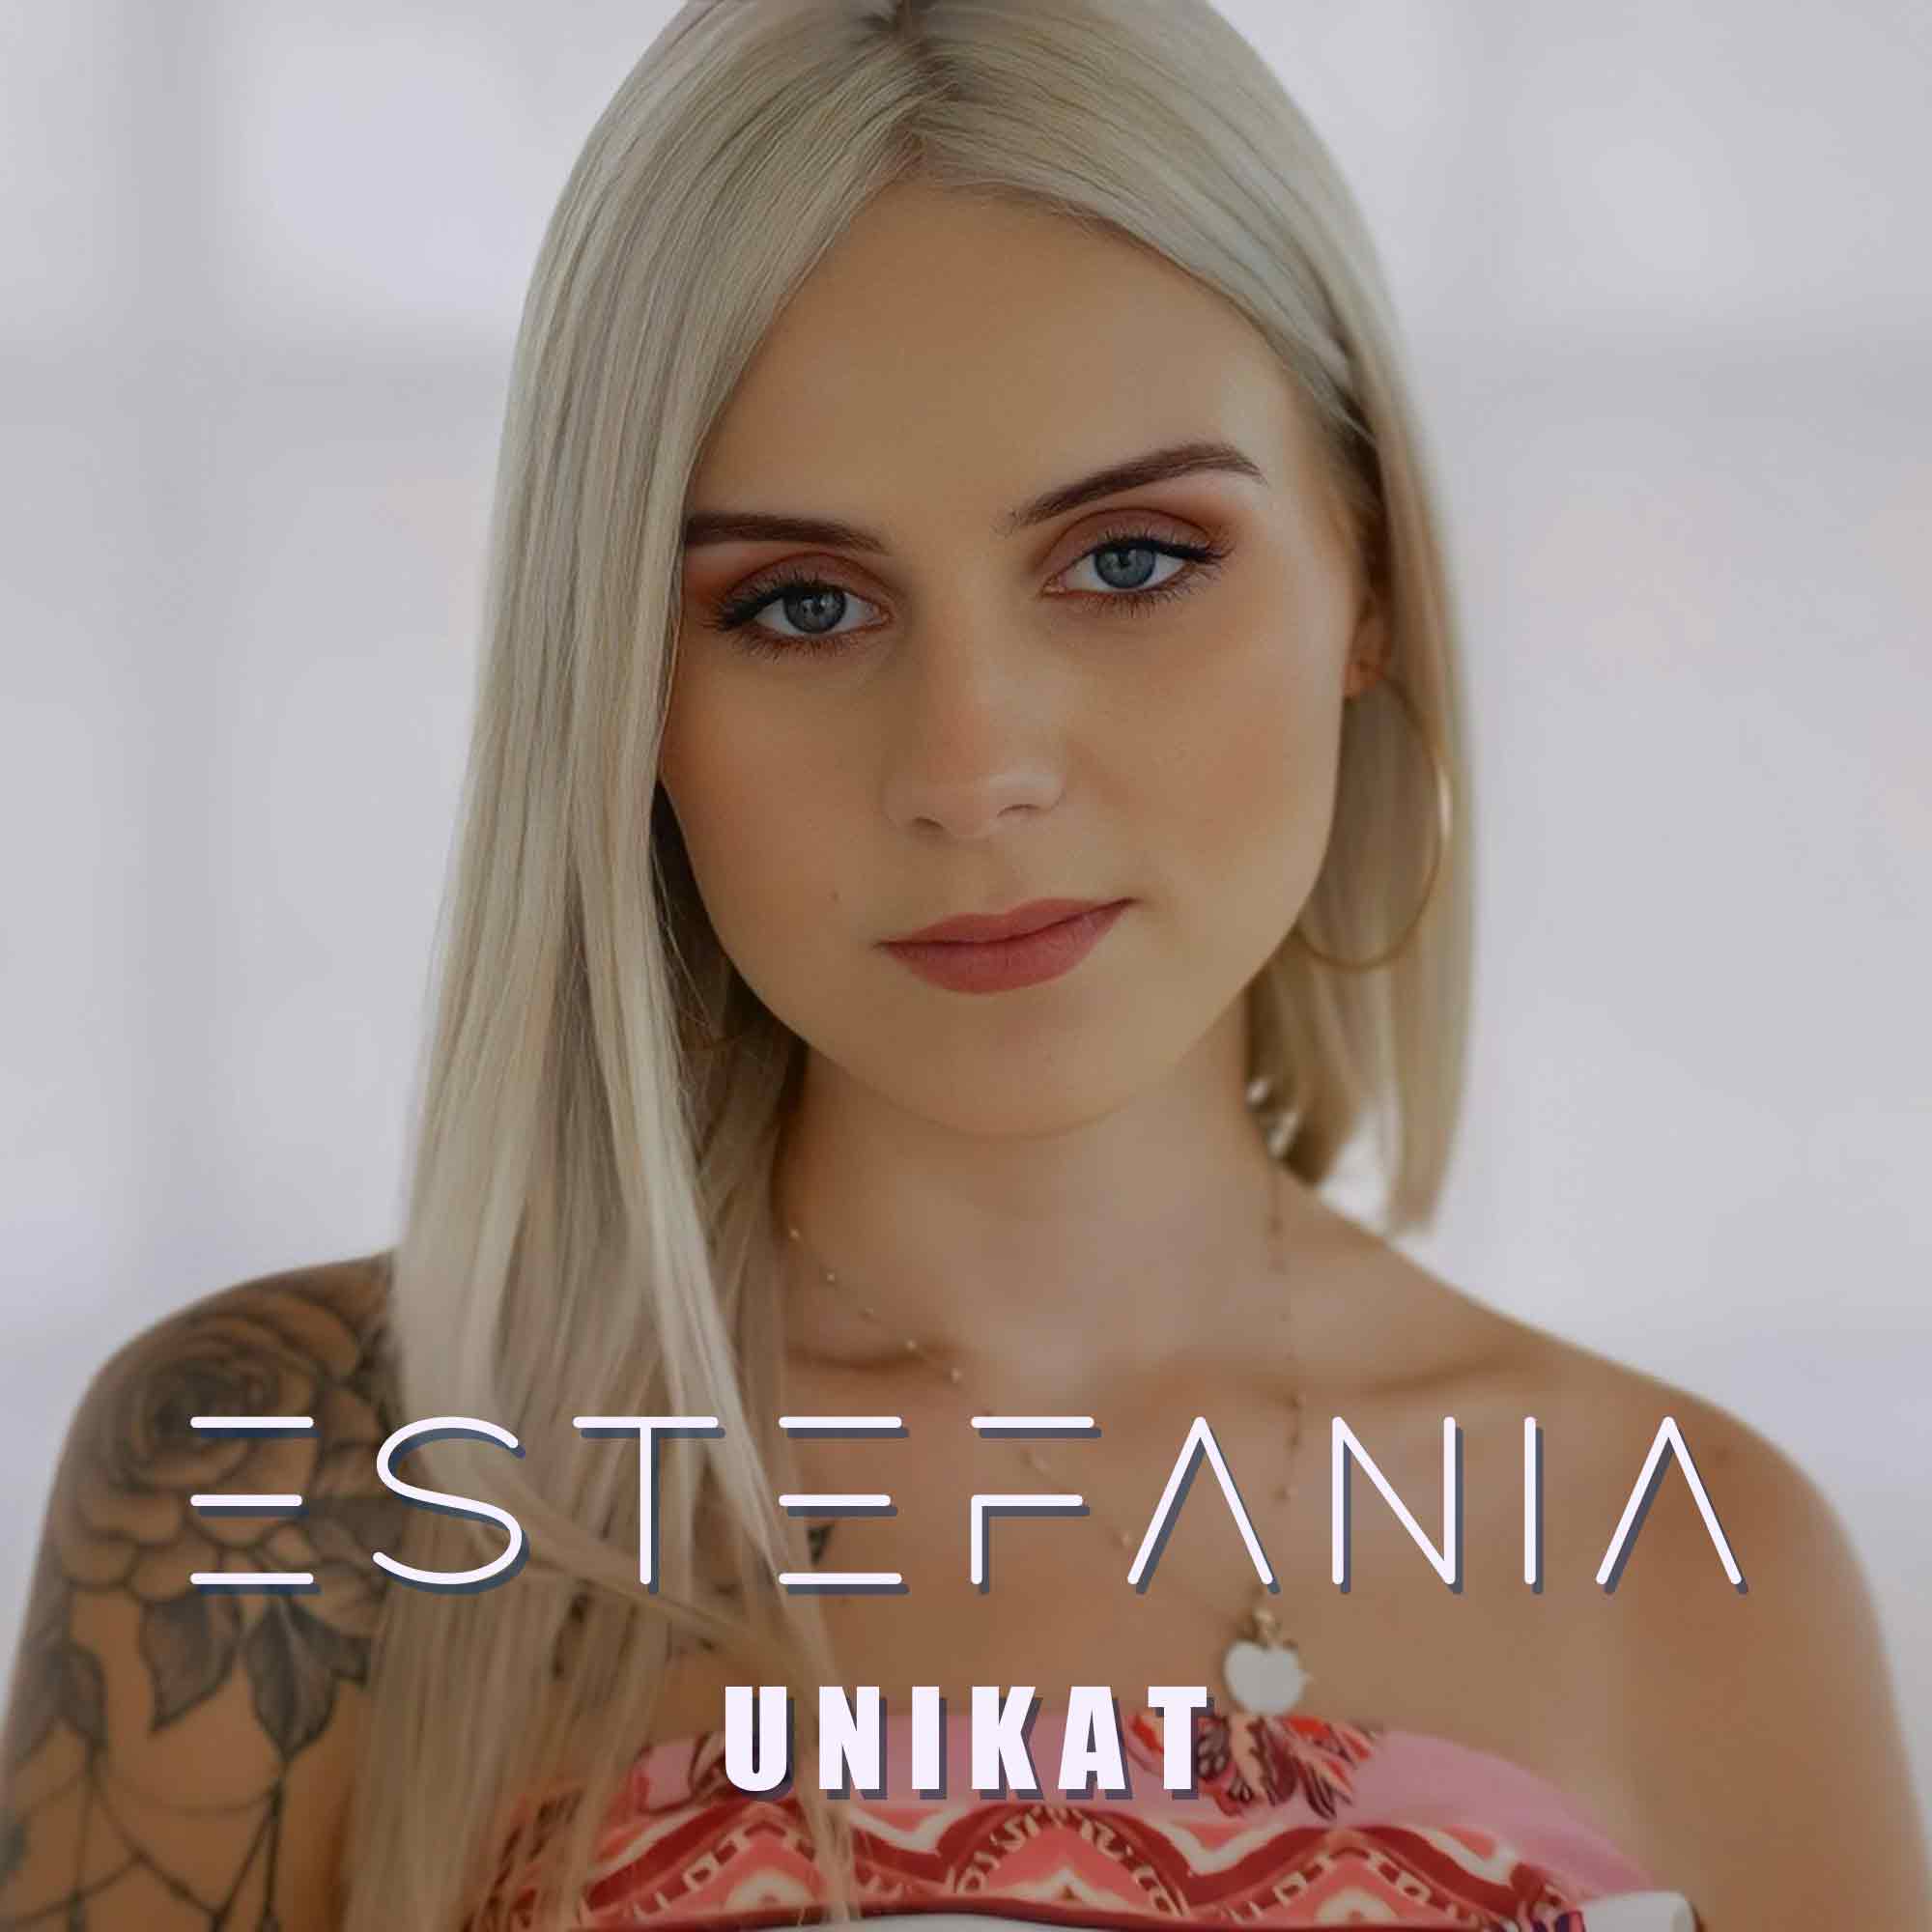 RTLZWEI-Estefania-Wollny-berzeugt-mit-ihrem-neuen-Song-Unikat-